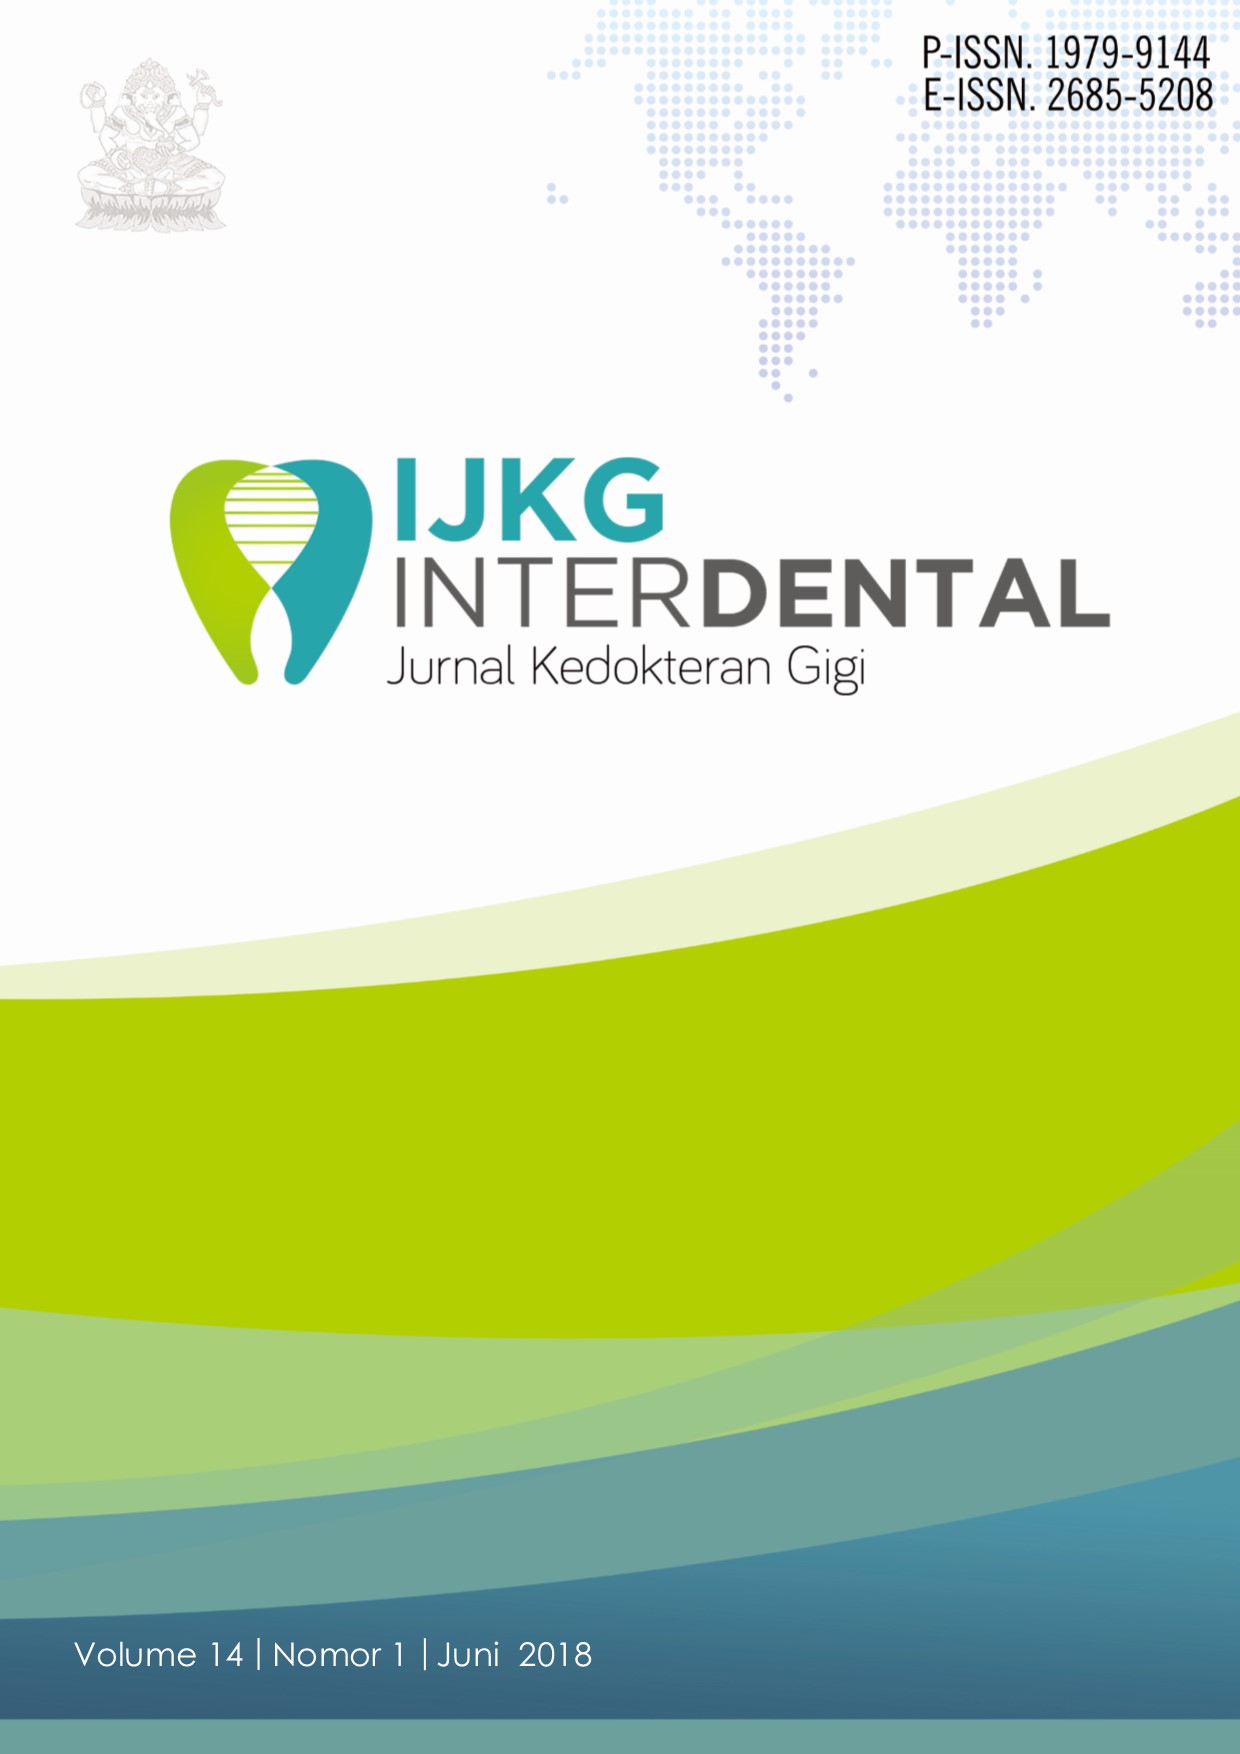 					View Vol. 14 No. 1 (2018): Interdental Jurnal Kedokteran Gigi (IJKG)
				